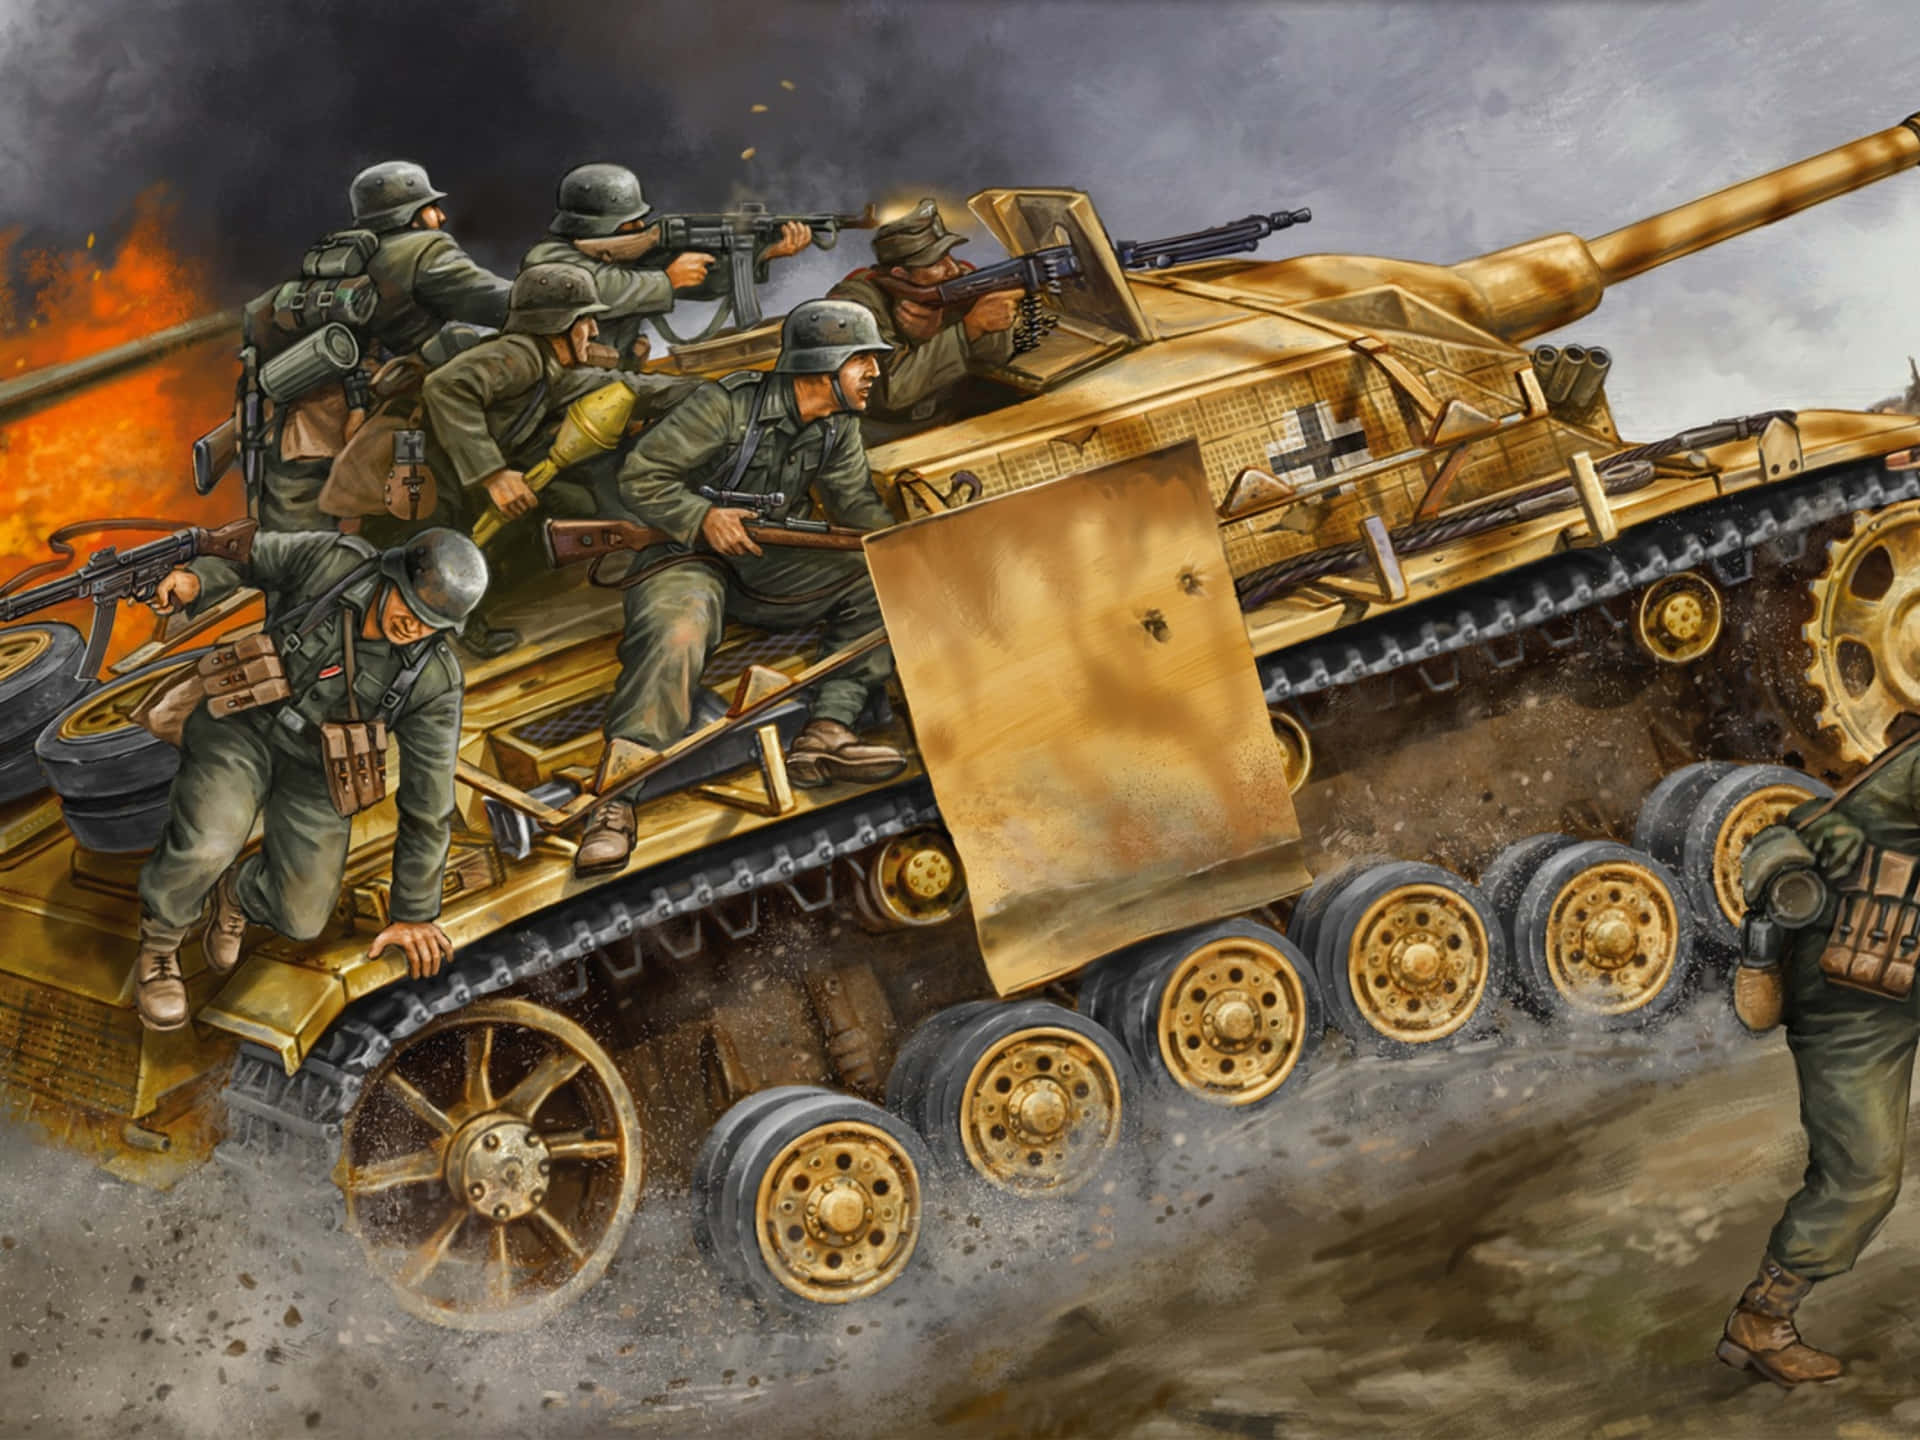 Enmålning Av En Stridsvagn Med Soldater På Den